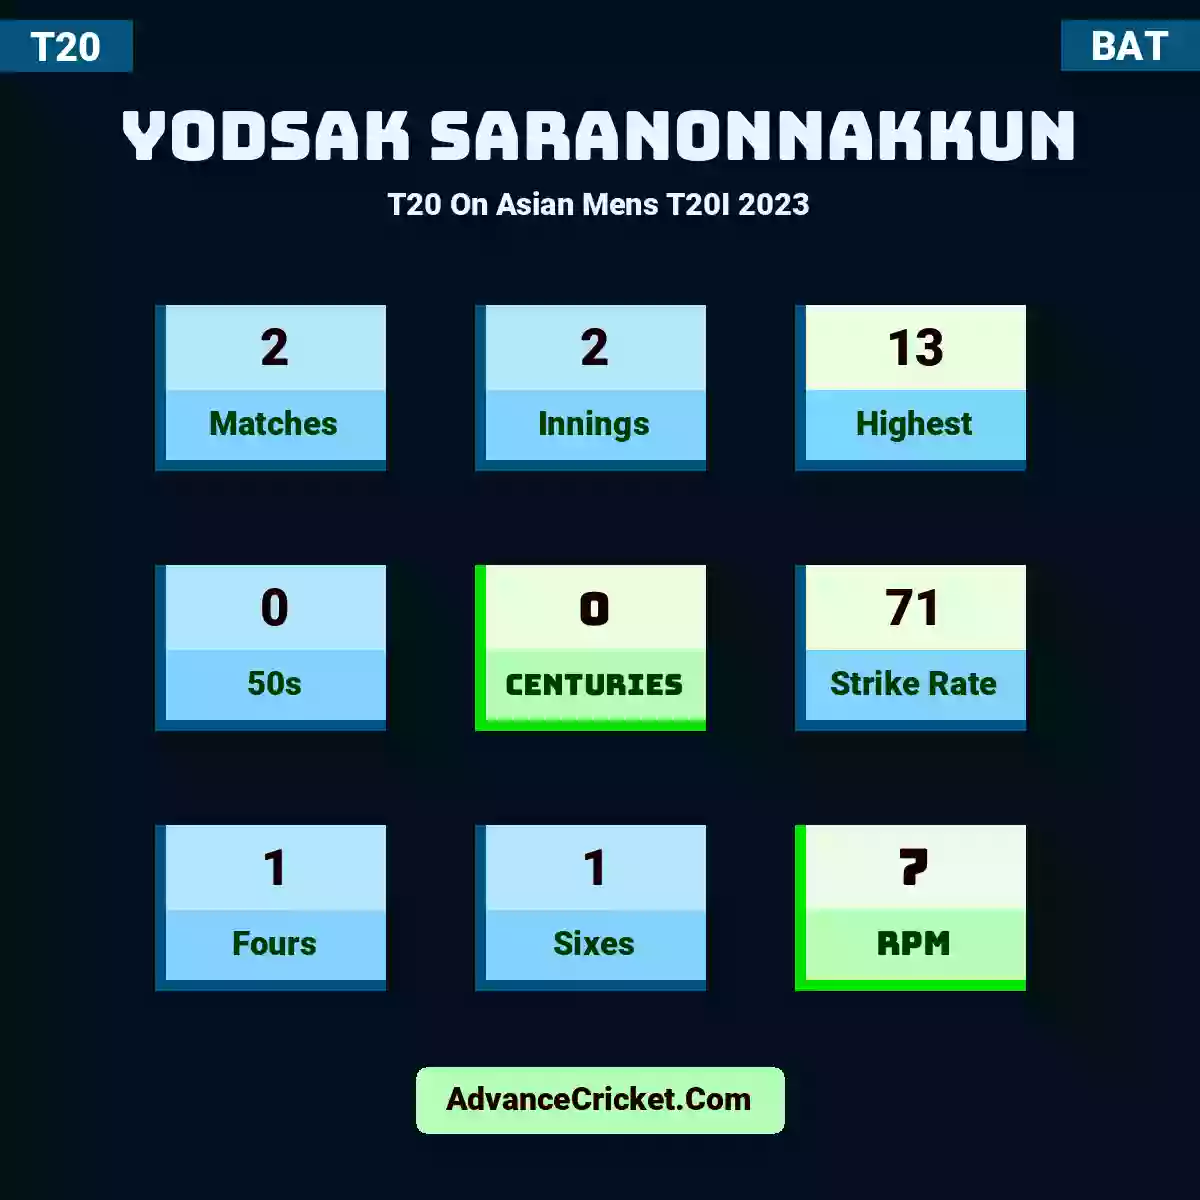 Yodsak Saranonnakkun T20  On Asian Mens T20I 2023, Yodsak Saranonnakkun played 2 matches, scored 13 runs as highest, 0 half-centuries, and 0 centuries, with a strike rate of 71. Y.Saranonnakkun hit 1 fours and 1 sixes, with an RPM of 7.